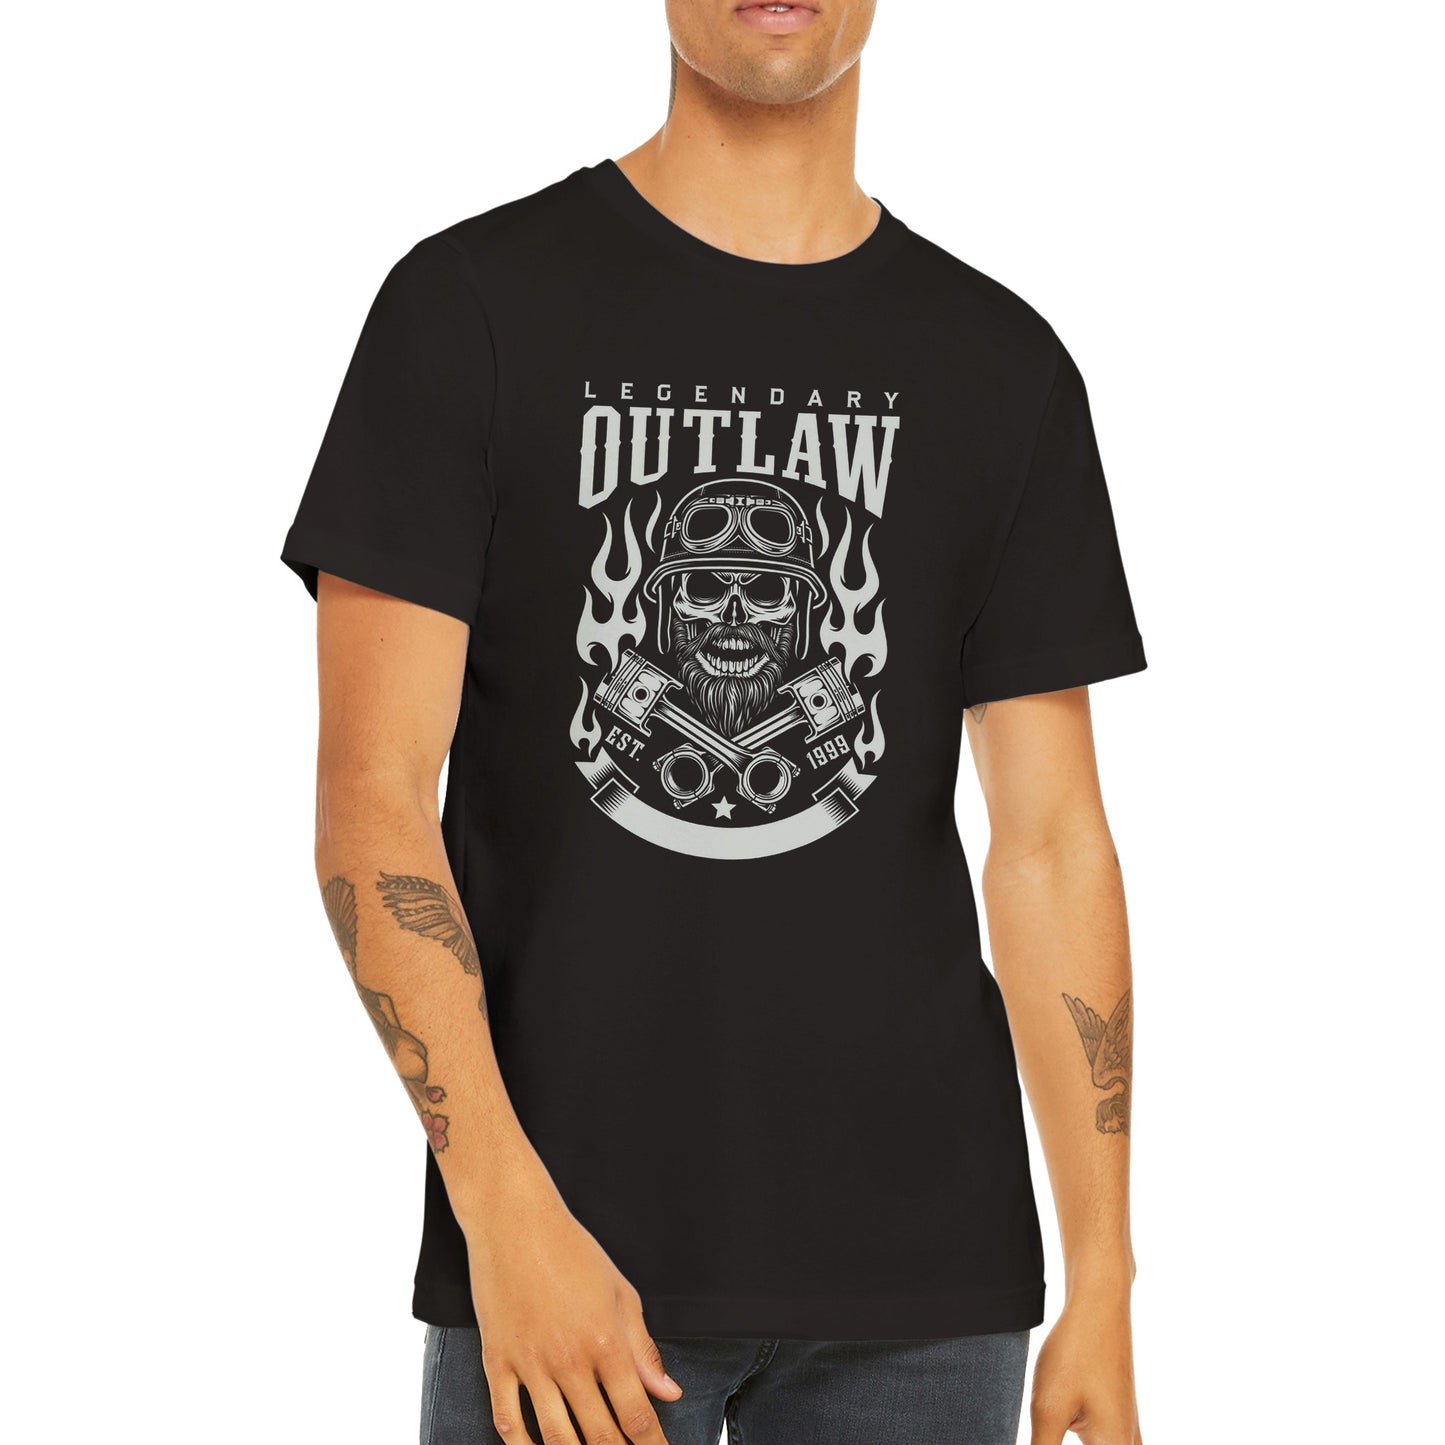 Legendary Outlaw T-shirt